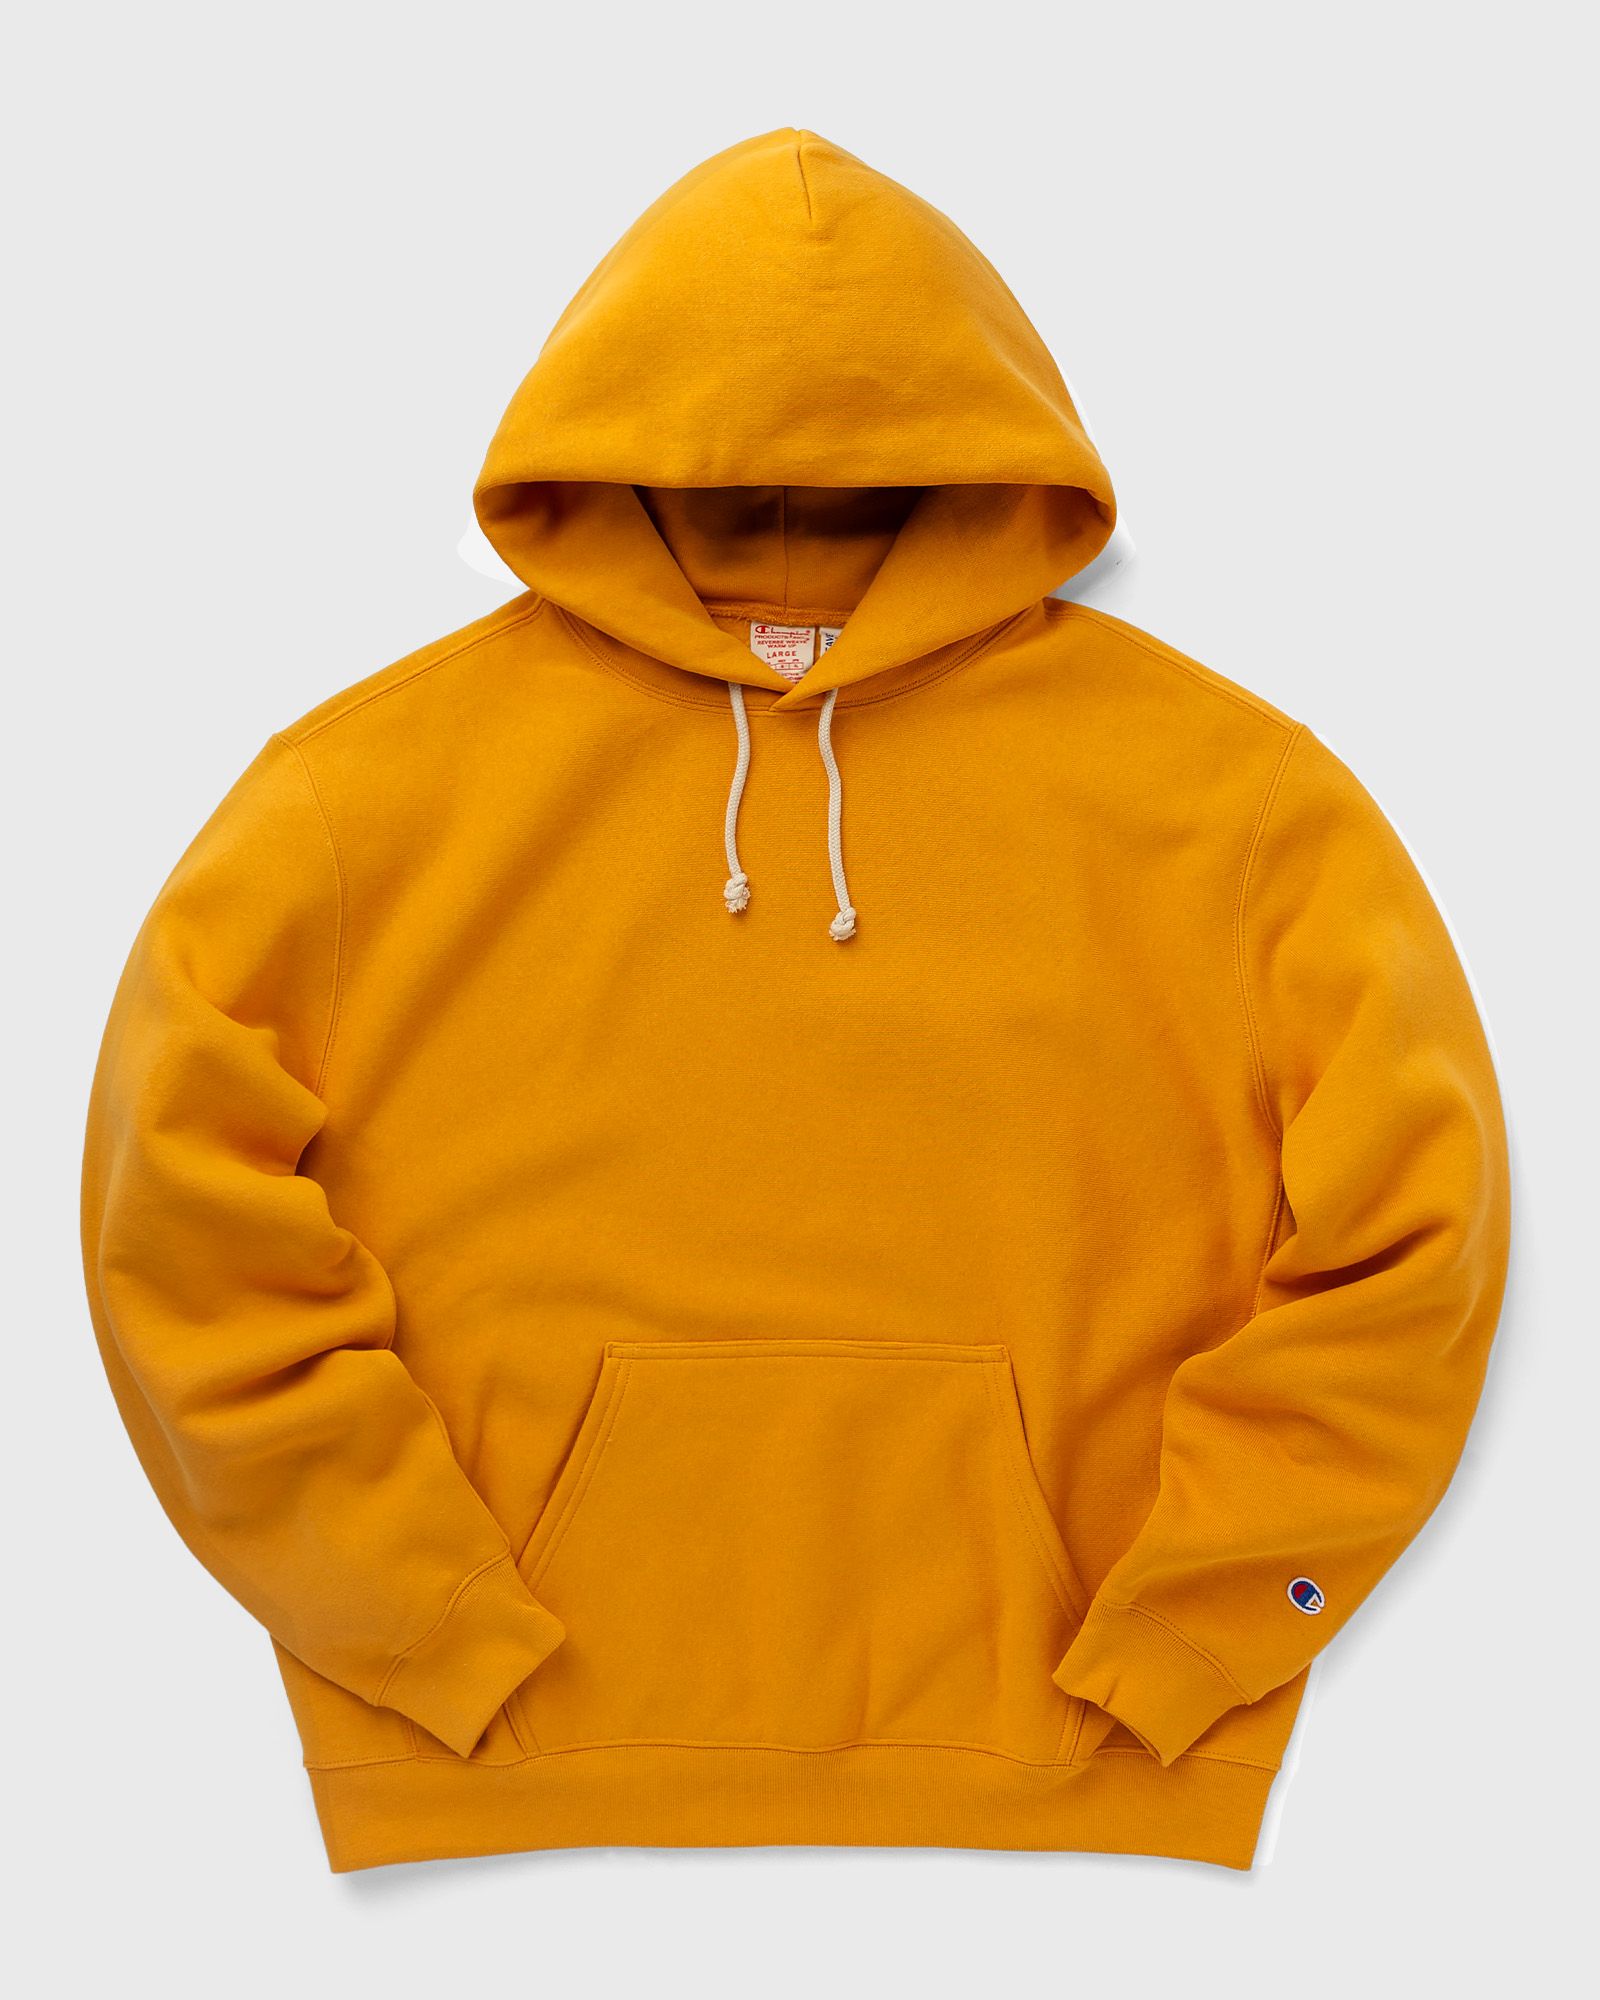 CHAMPION - hooded sweatshirt men hoodies yellow in größe:m